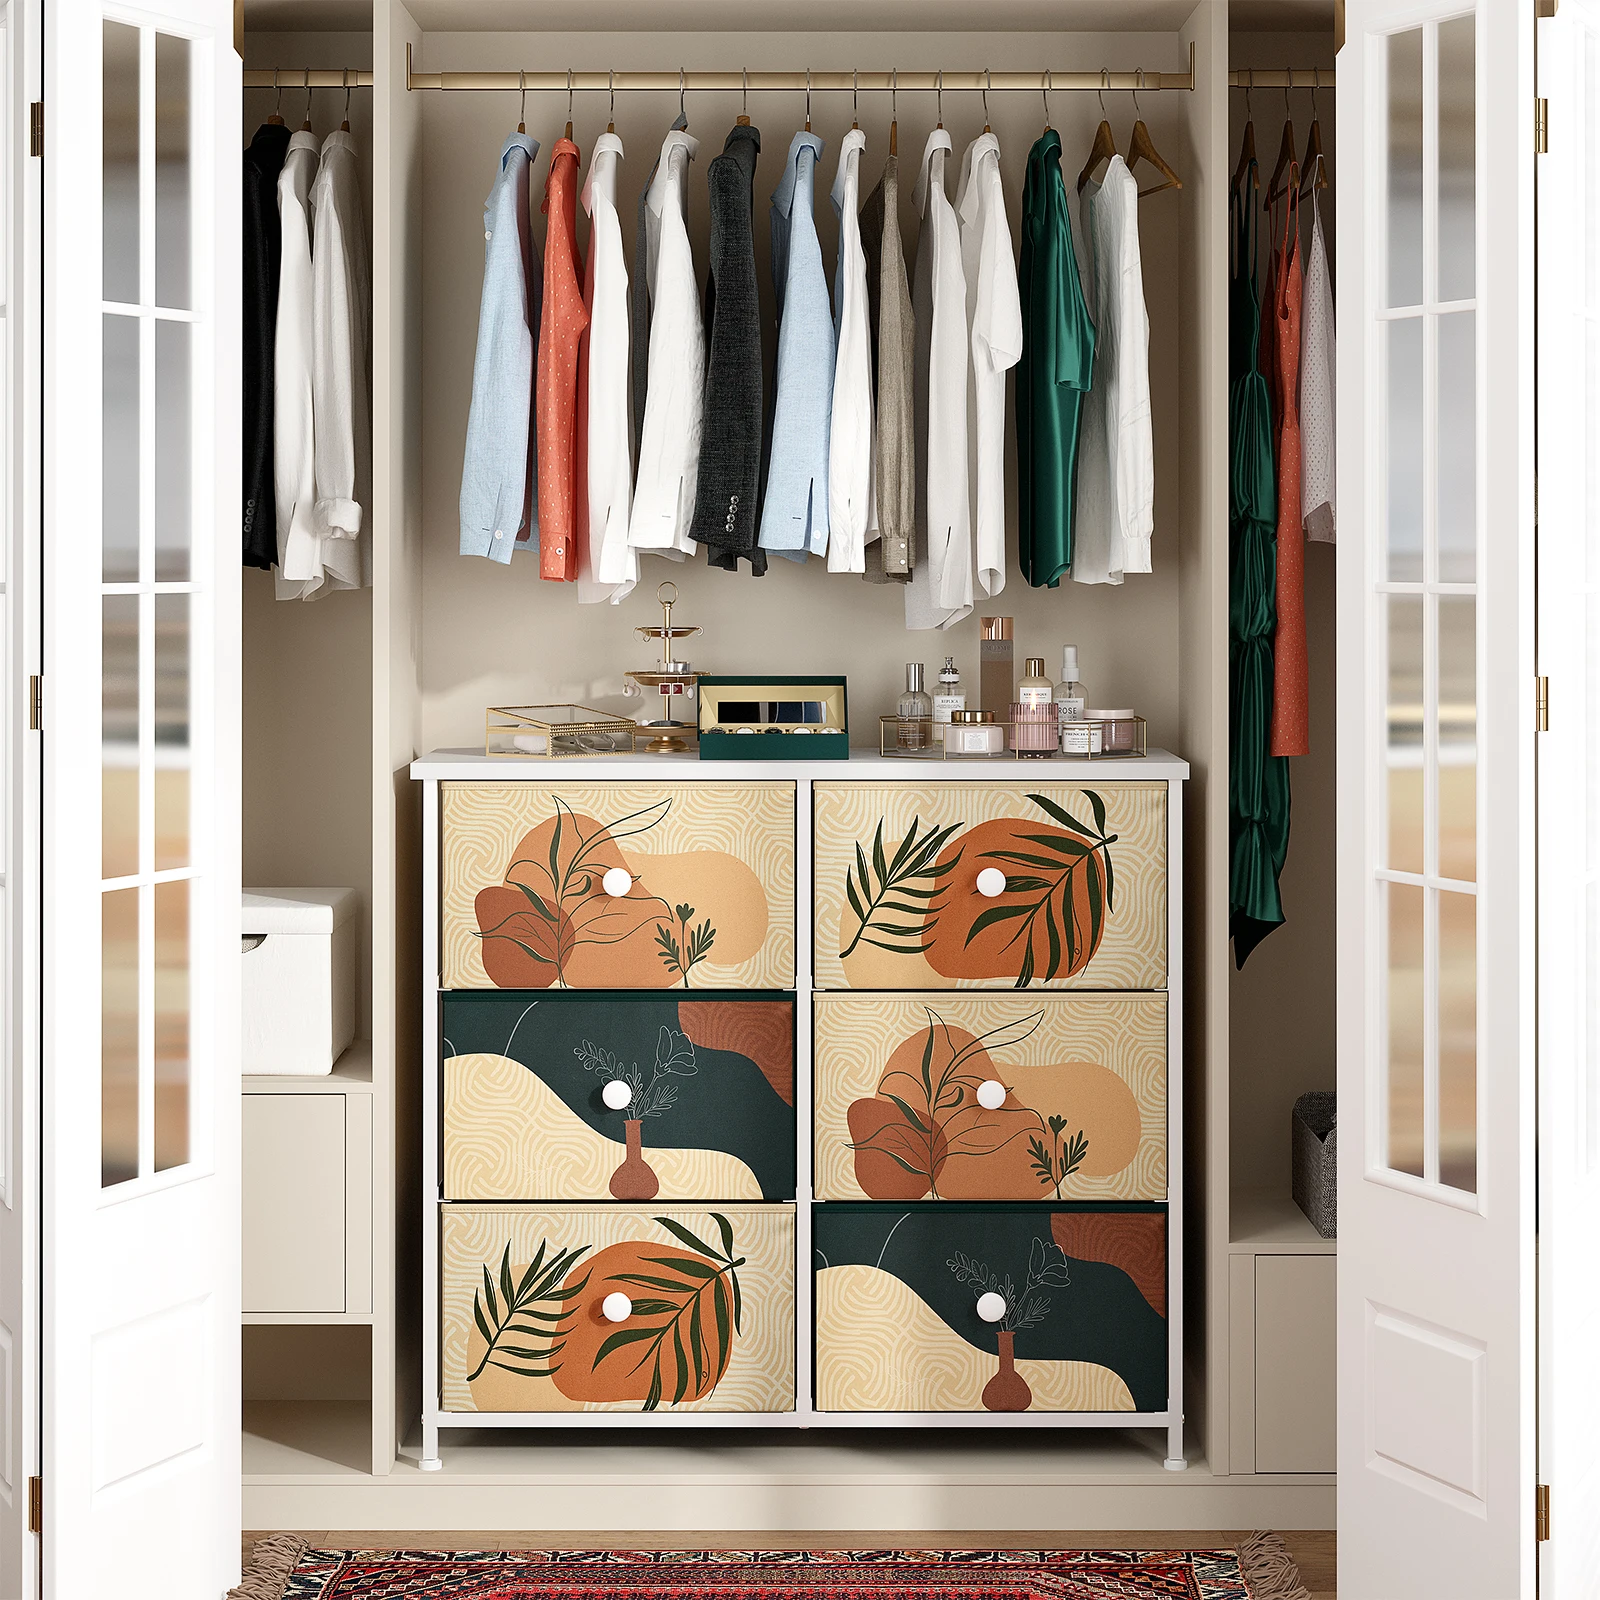 https://ae01.alicdn.com/kf/S952307d8d08f47c8aca0d0beb2c5daf8q/Enhomee-6-Drawer-Dresser-for-Bedroom-Small-Dresser-Organizer-Fabric-Dressers-Chest-of-Drawers-for-Kids.jpg